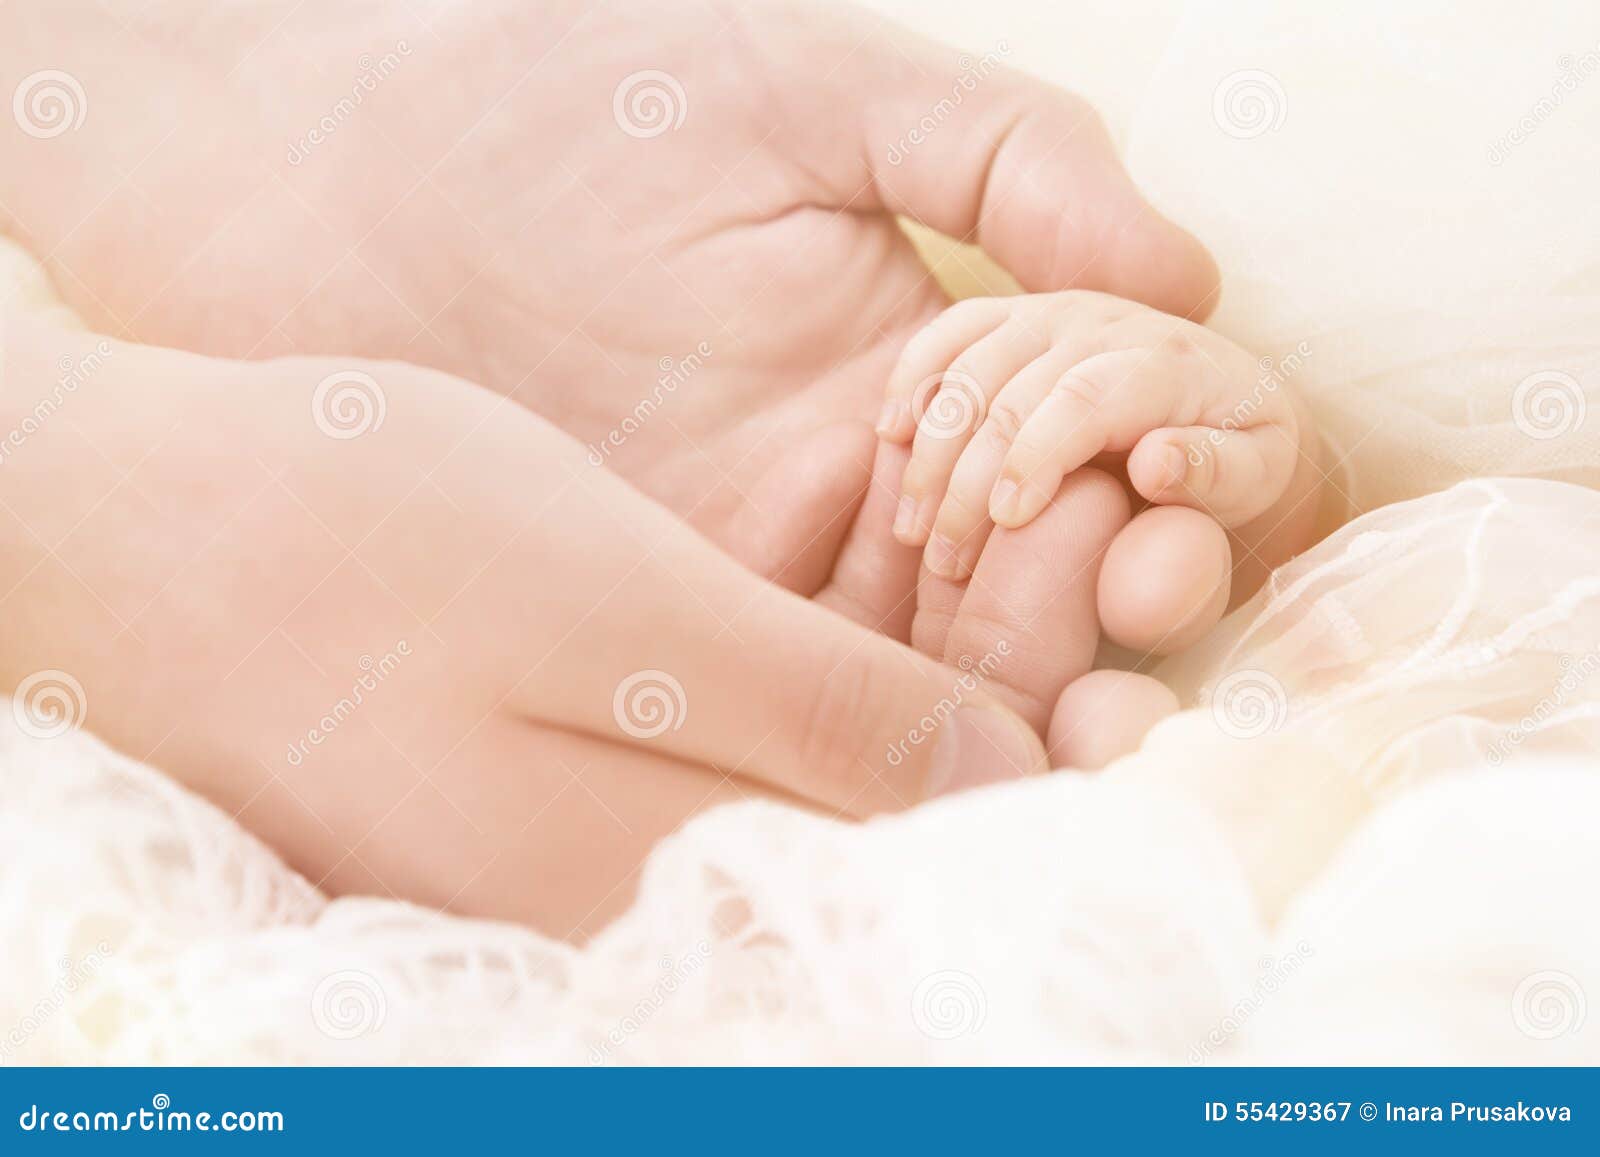 baby hand, mother hold new born child, parent newborn kid help